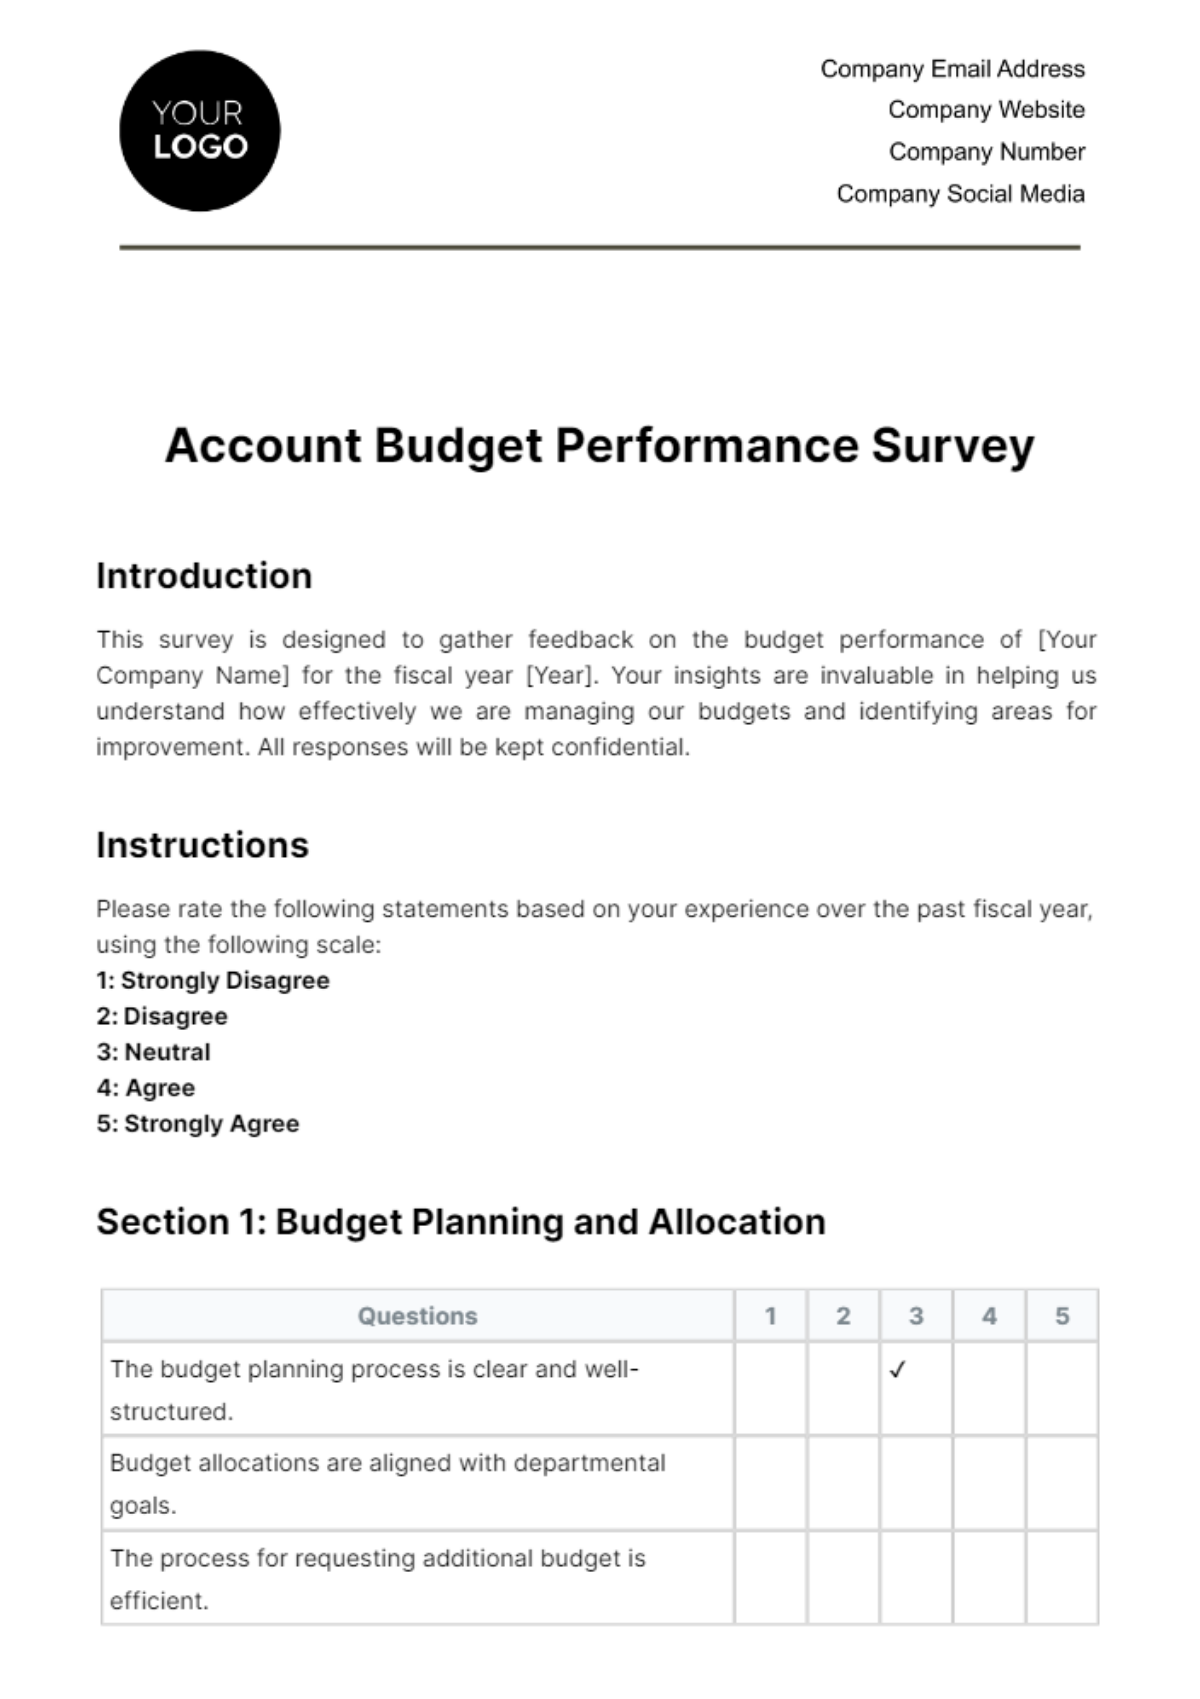 Account Budget Performance Survey Template